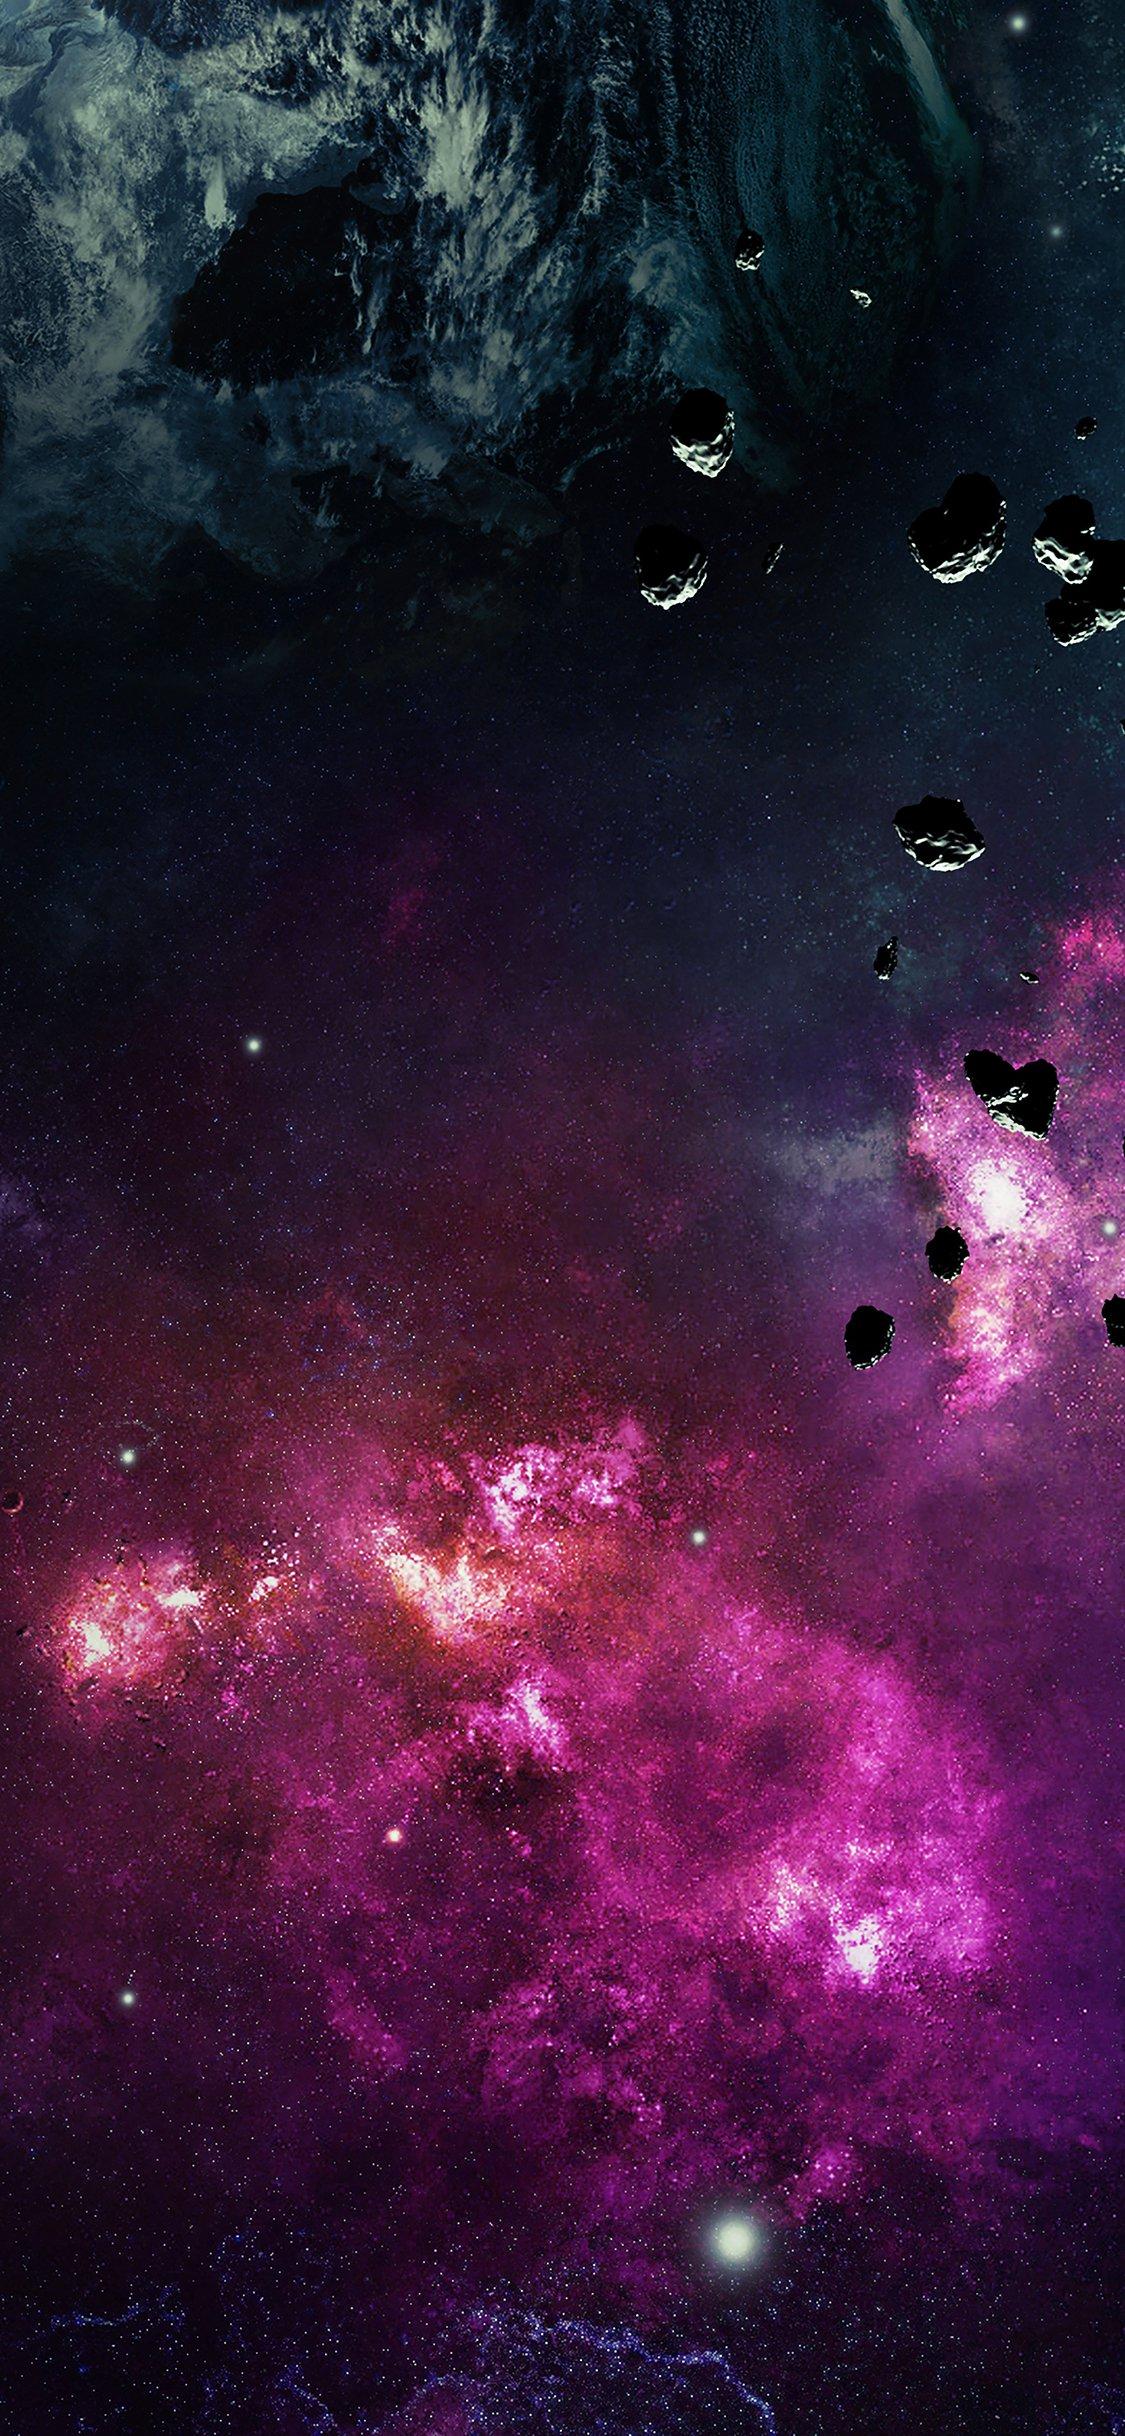 Space planet stars stellar dark iPhone X Wallpapers Free Download